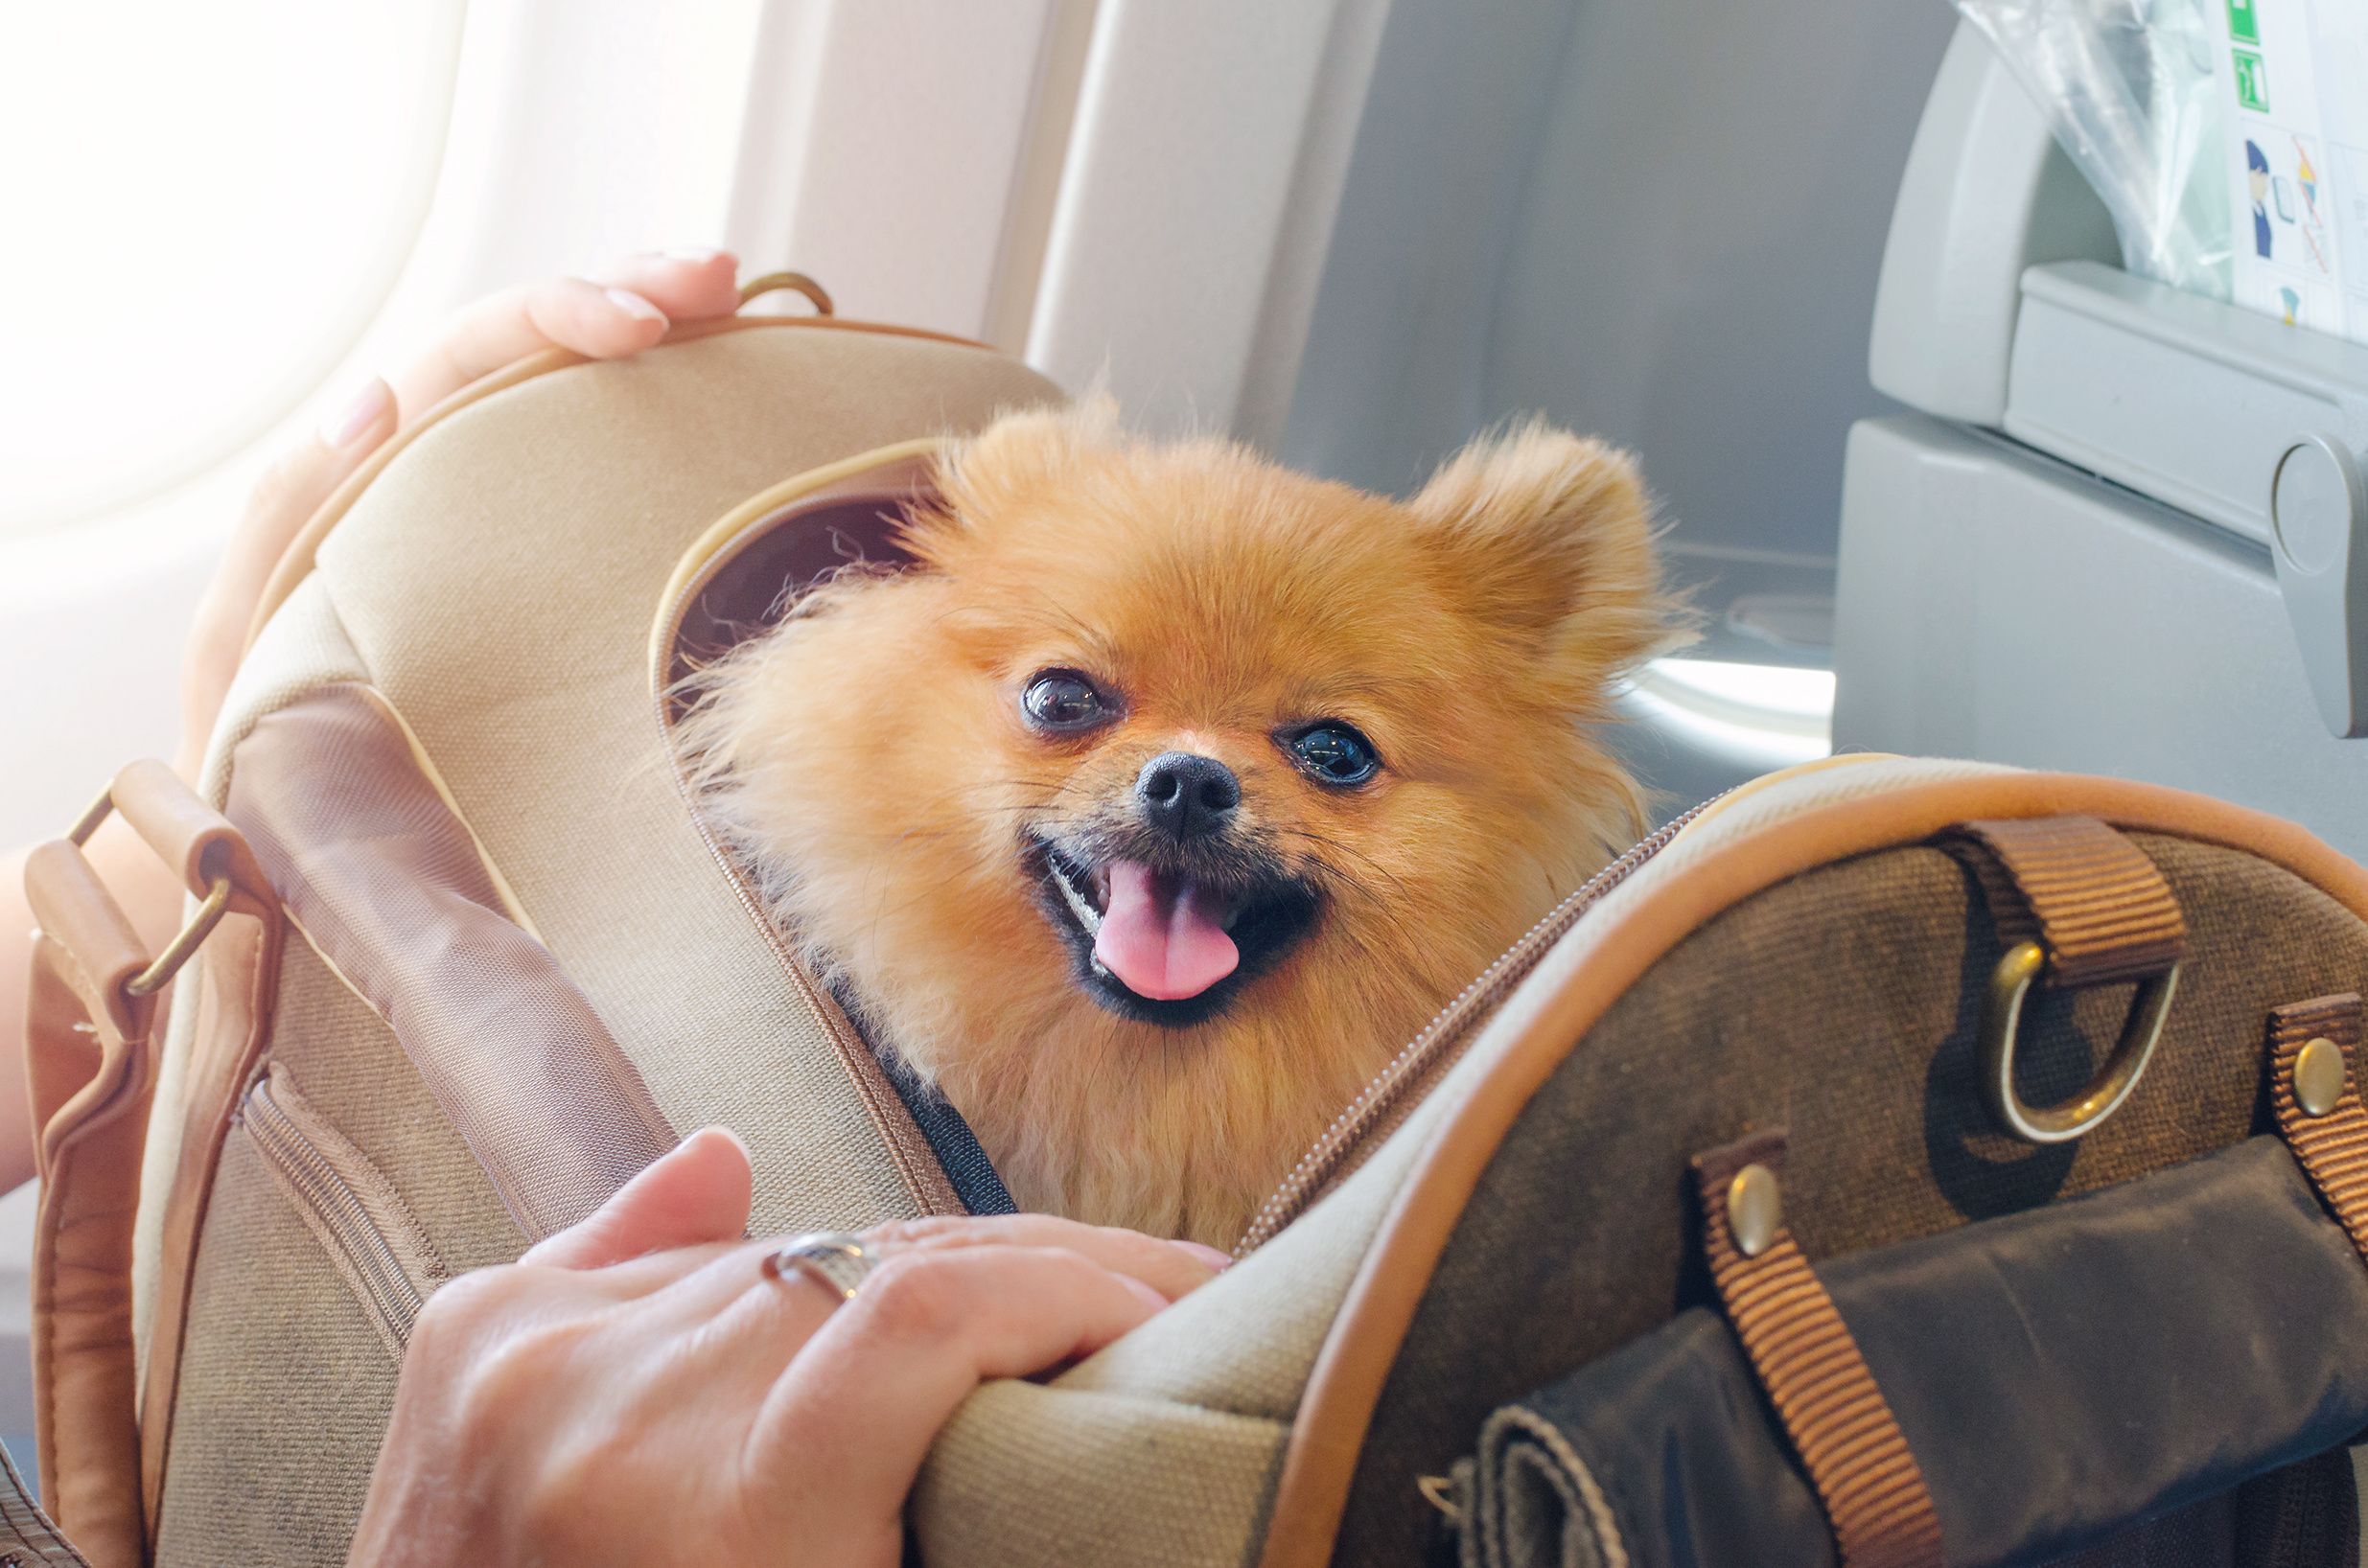 travel with service animal jetblue